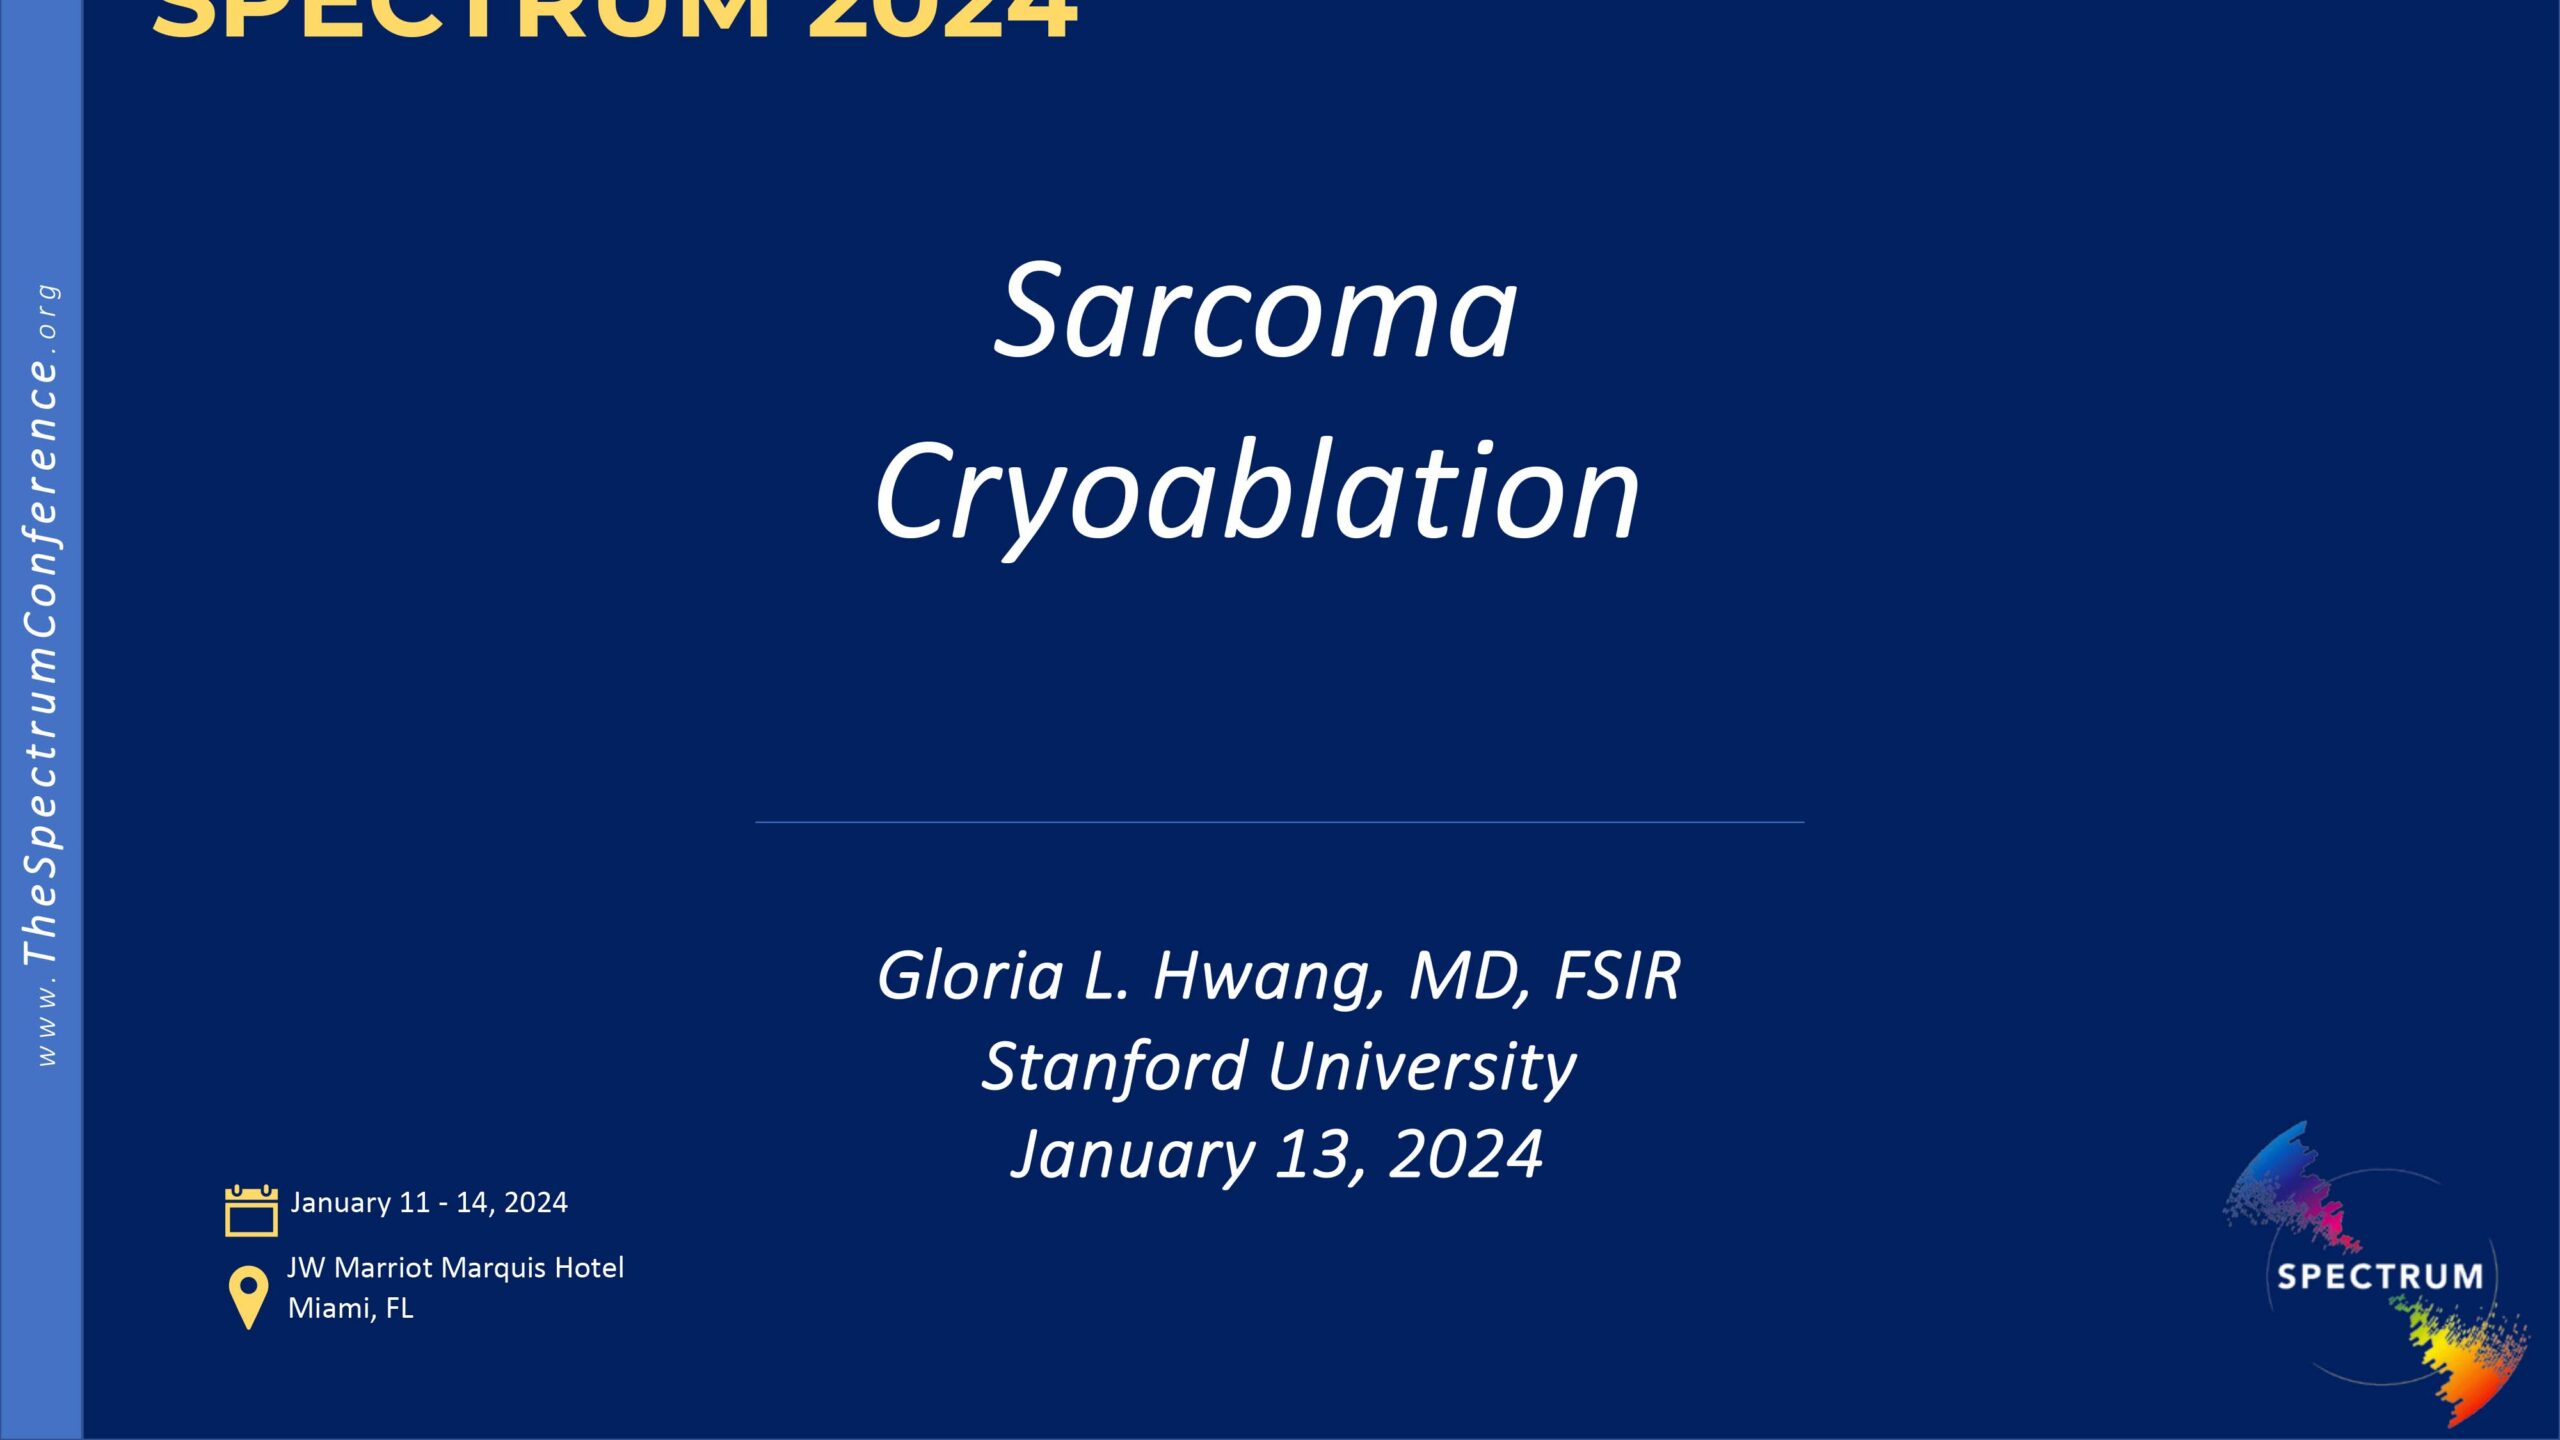 Sarcoma Cryoablation